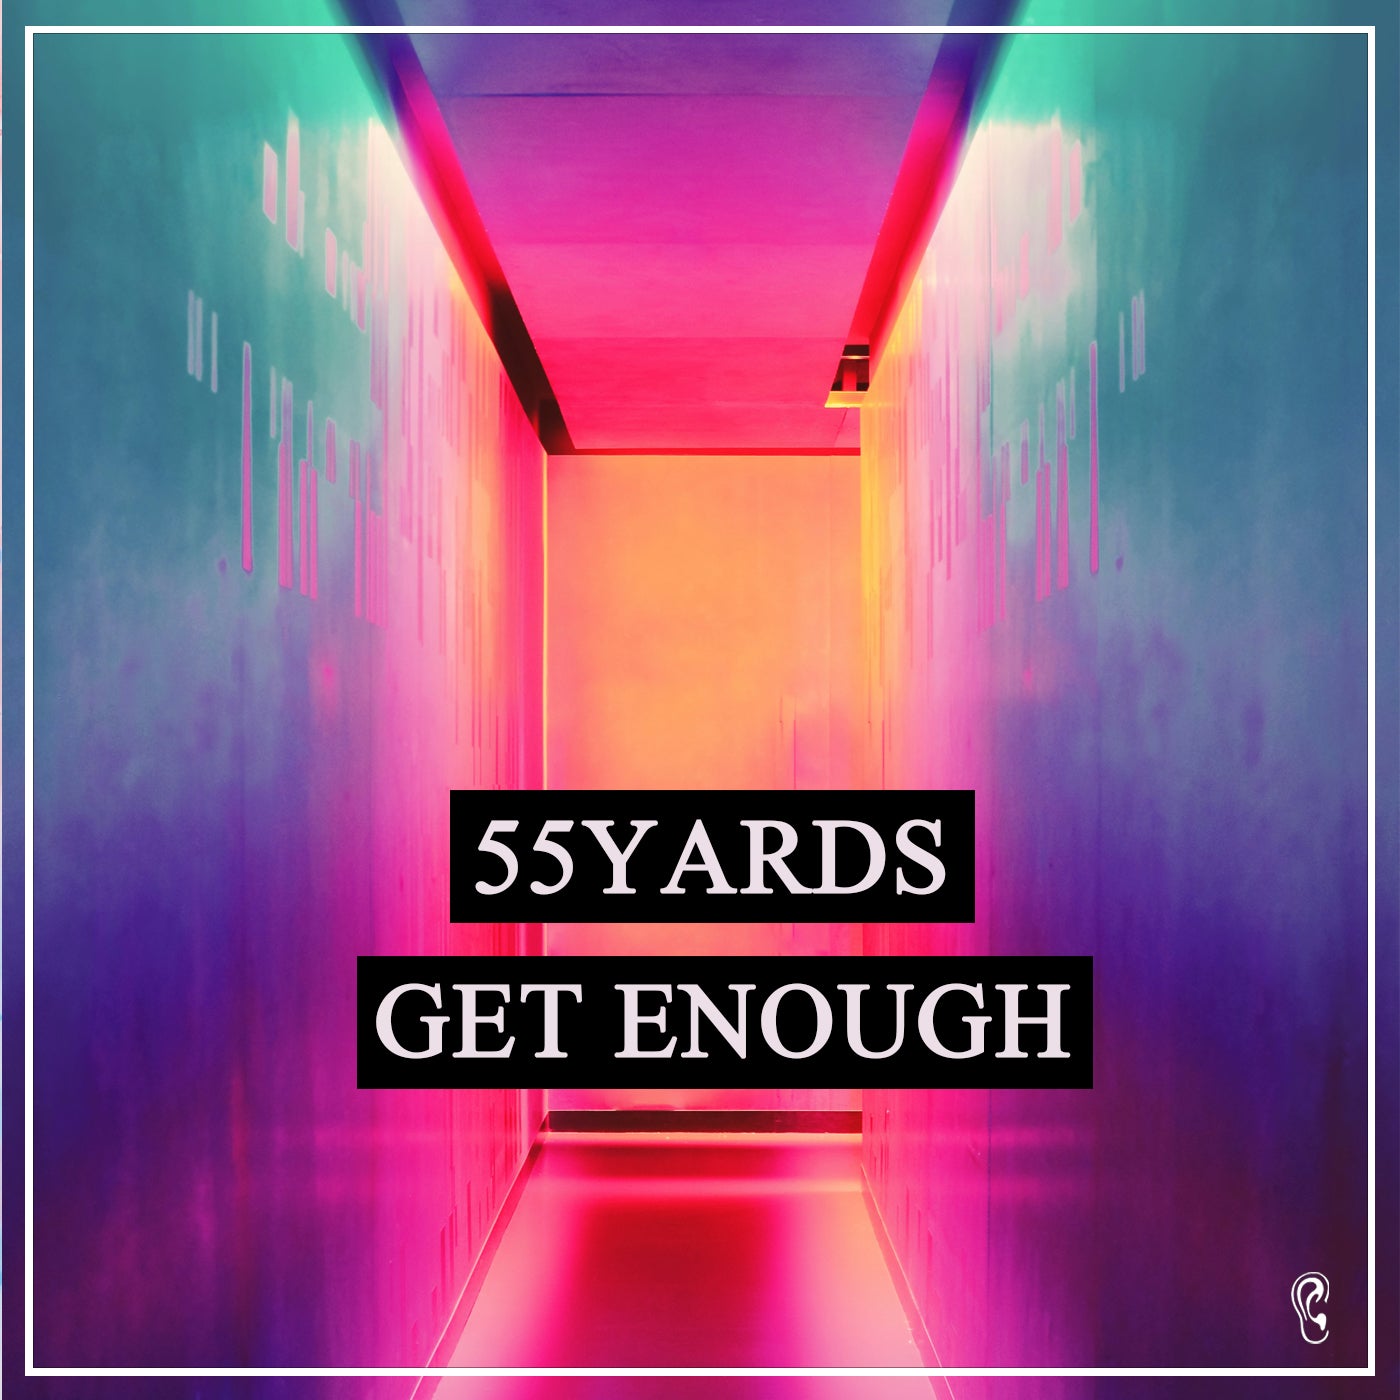 Get Enough